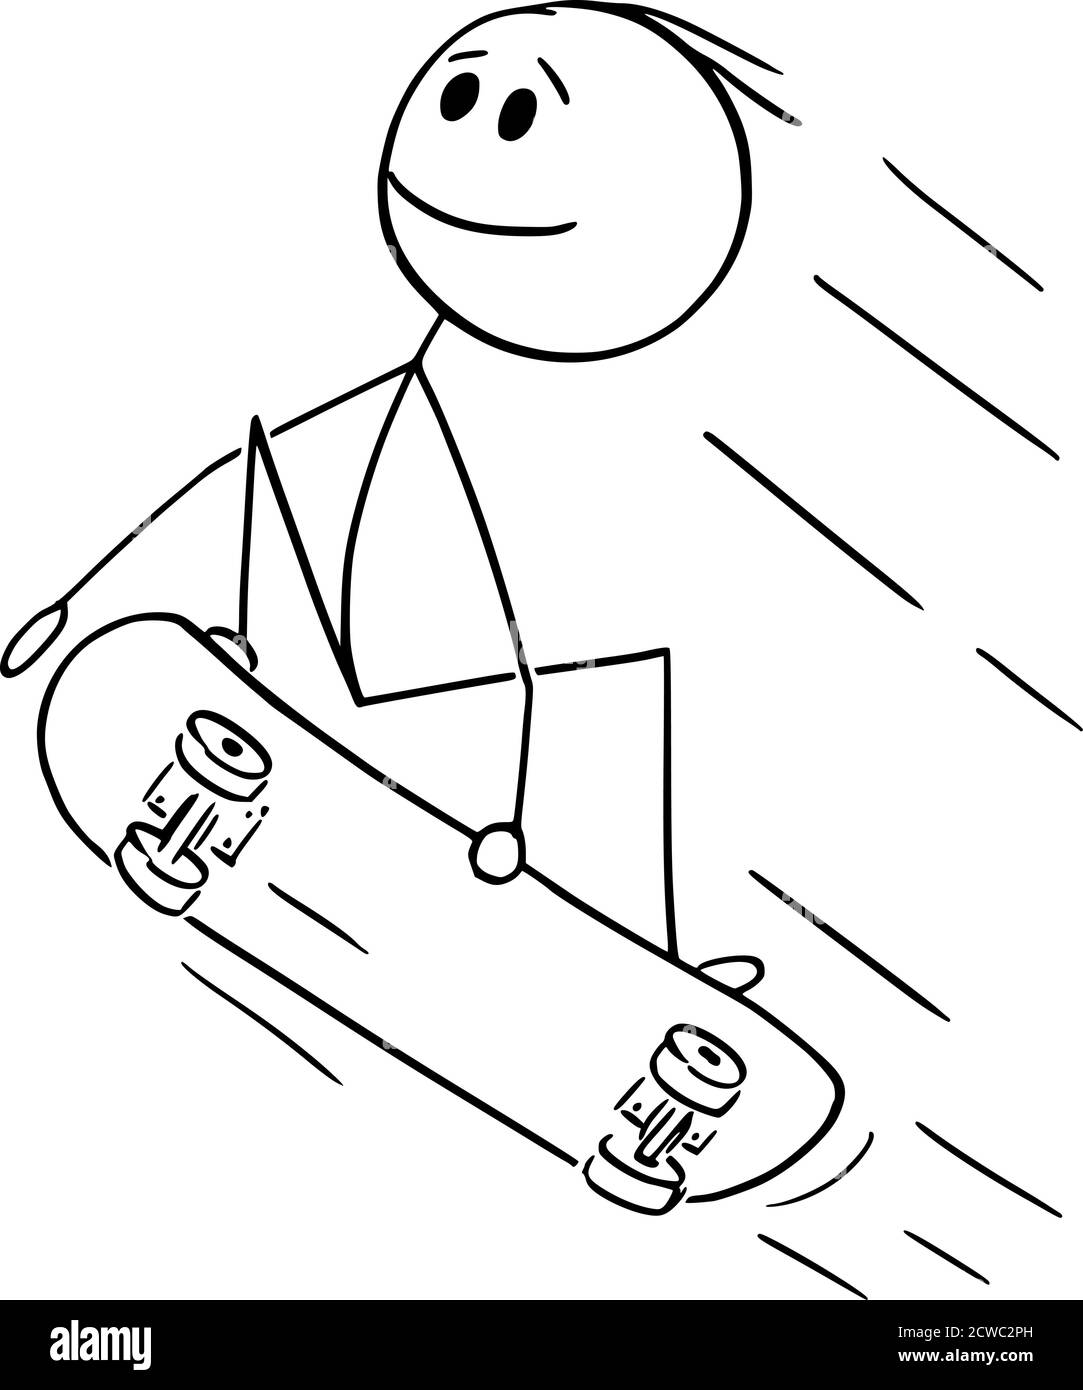 Vector cartoon stick figure drawing conceptual illustration of man, boy, skater or skateboarder jumping or doing trick or skateboarding on skateboard. Stock Vector